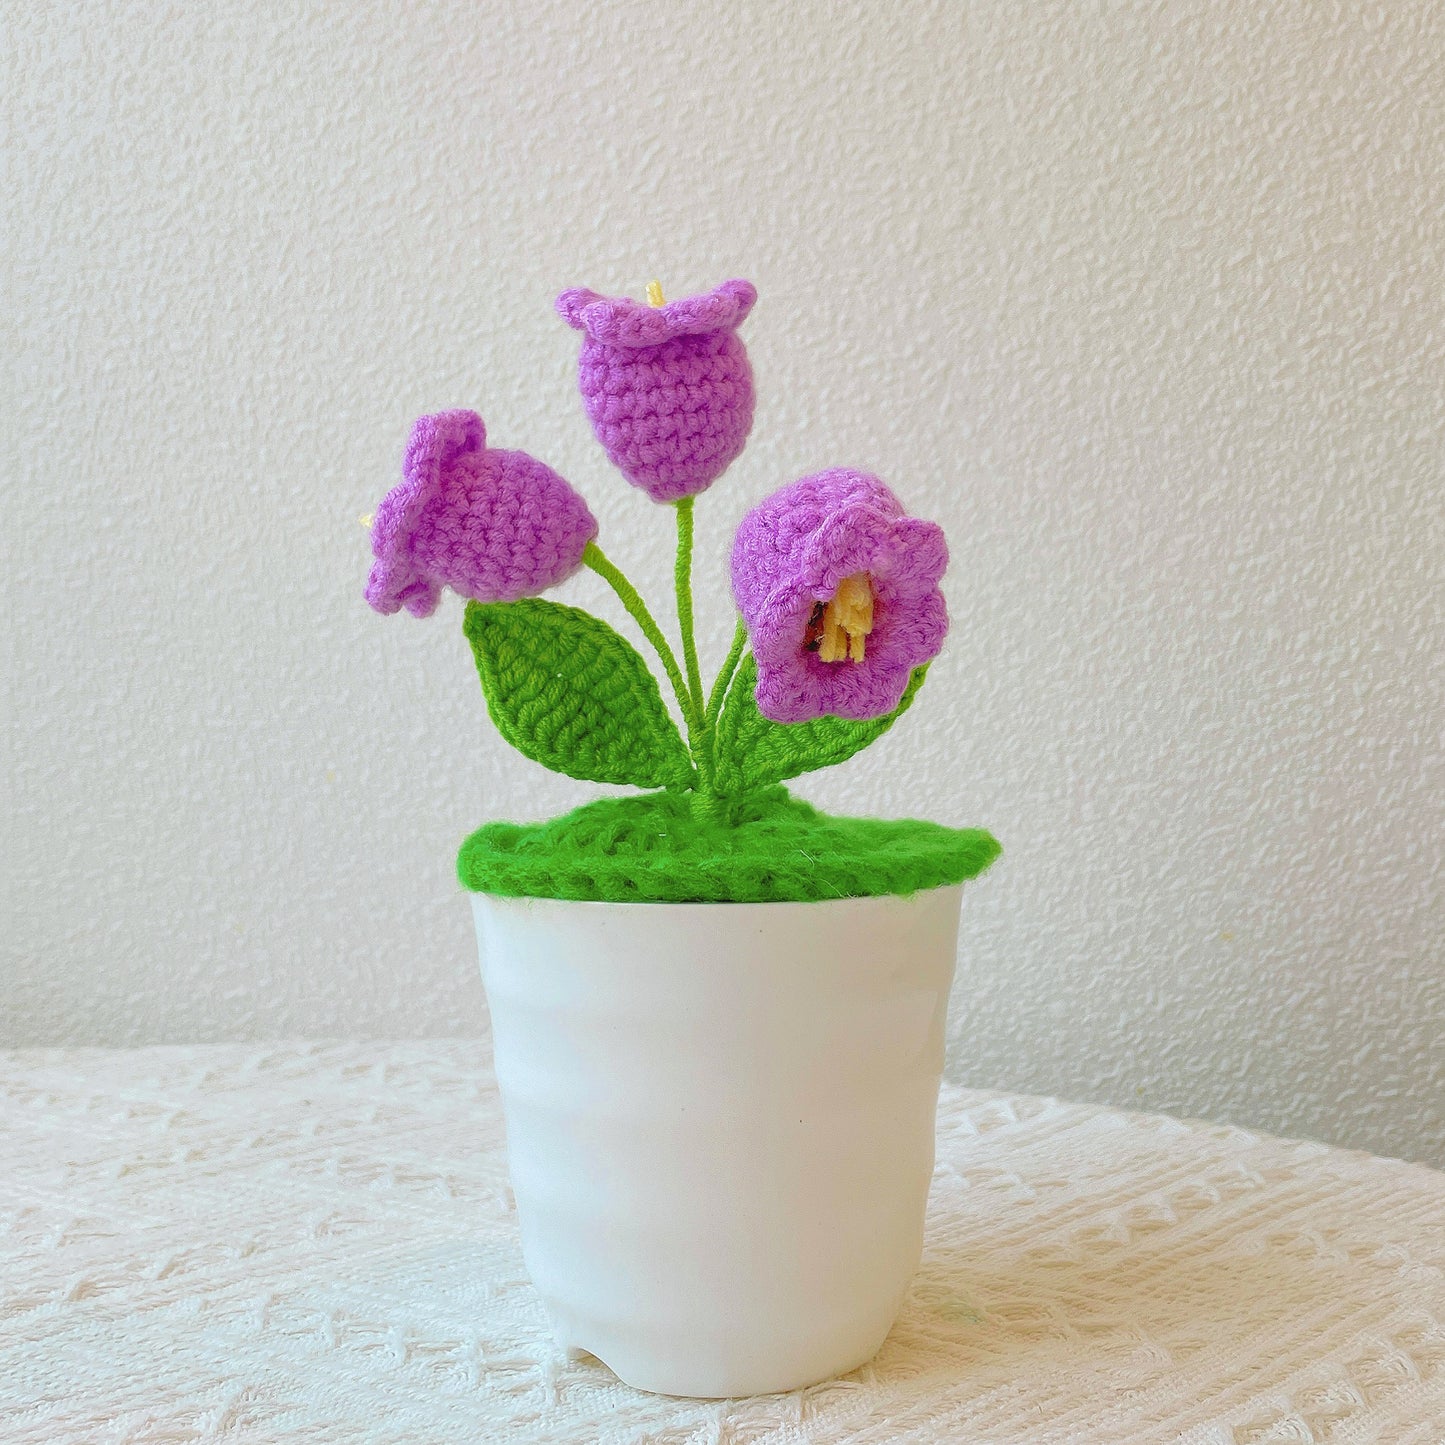 Crochet Lily Orchid Potted Plant LED Lamp - Mother's Day Chrismas Gift Exchange Secret Santa